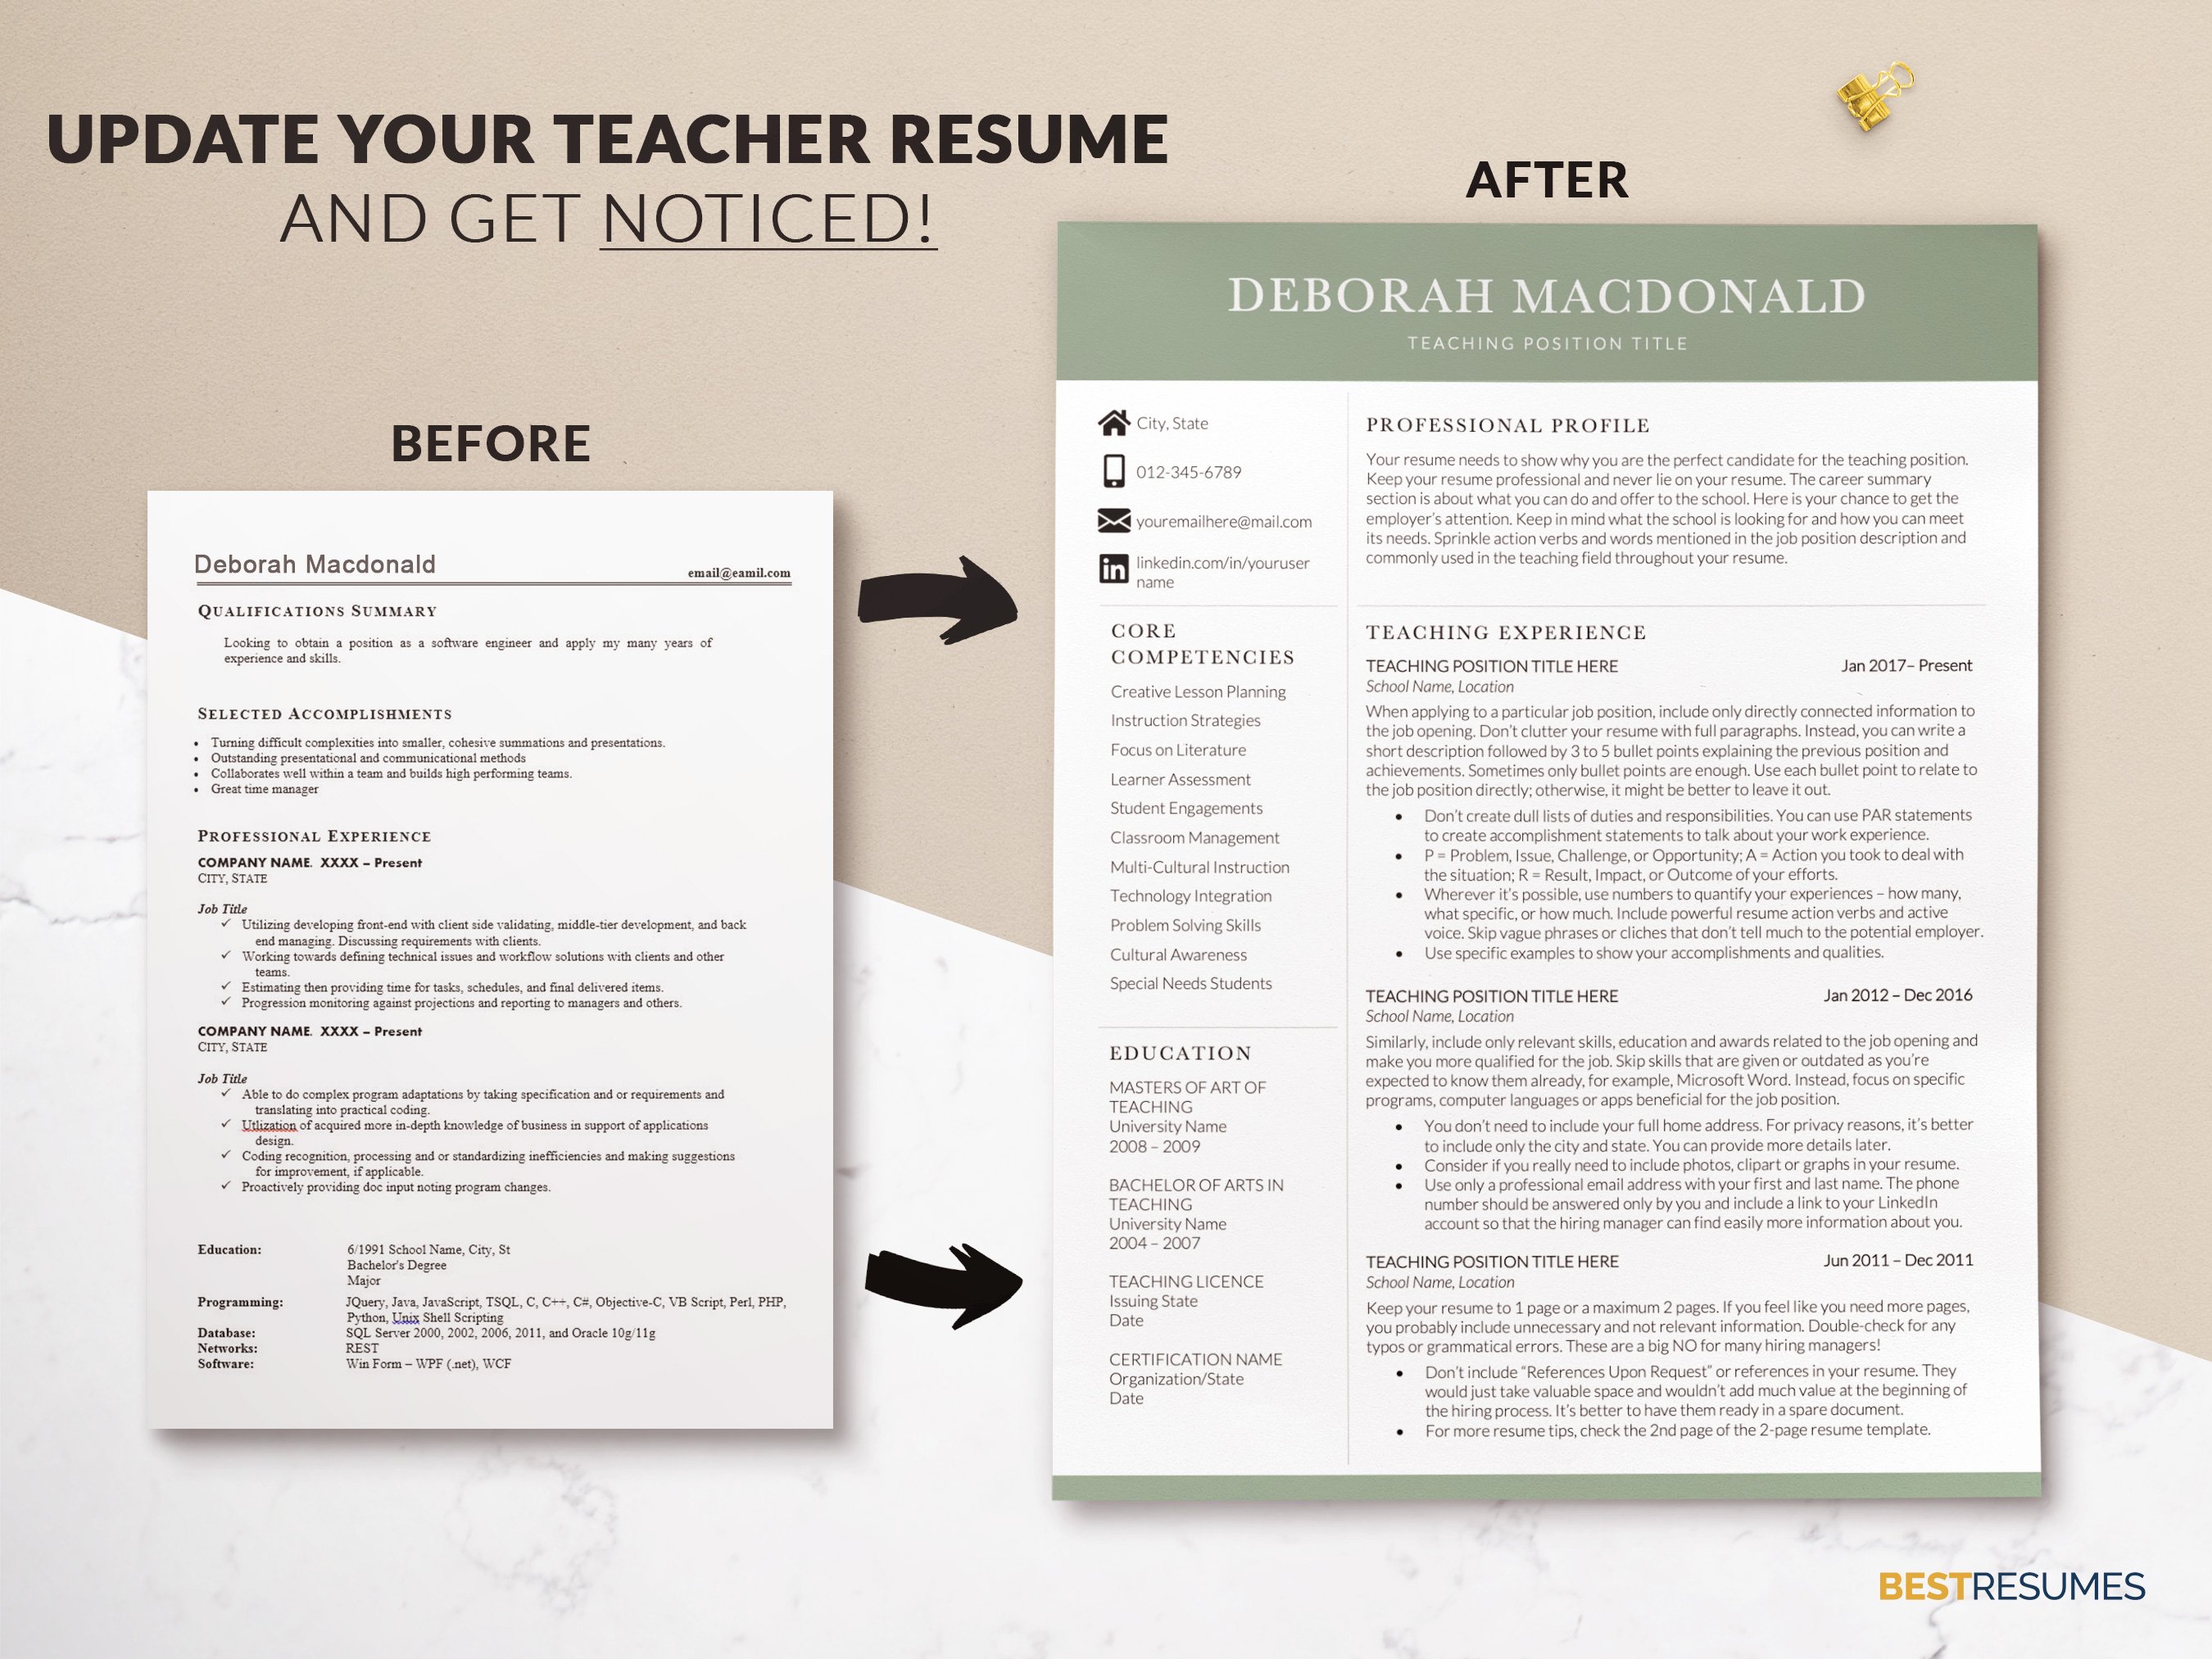 modern resume for teachers template update your teacher resume deborah macdonald 914